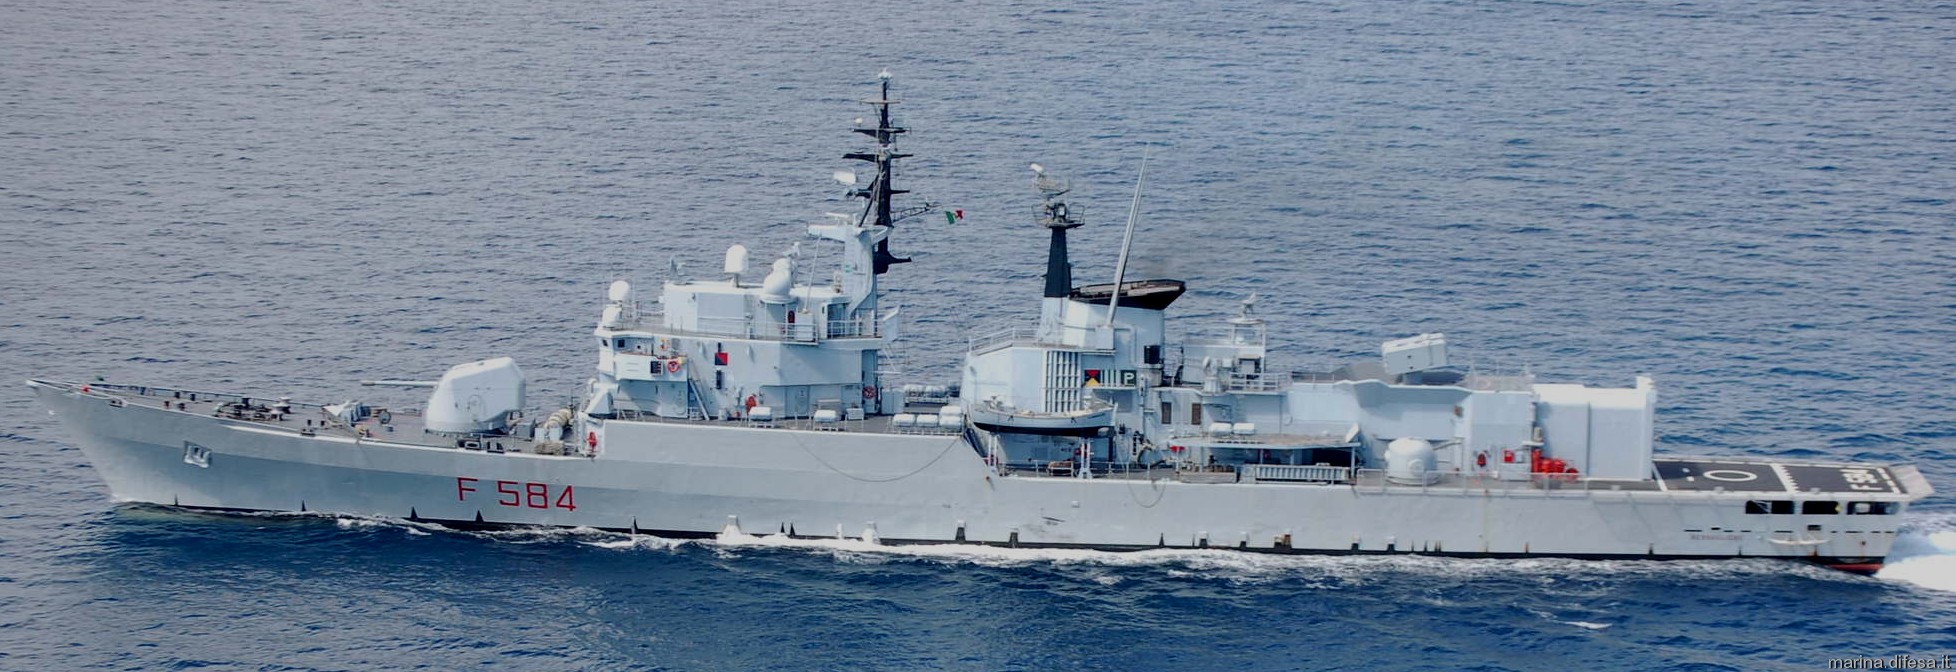 f-584 bersagliere nave its soldati lupo class frigate italian navy marina militare 15